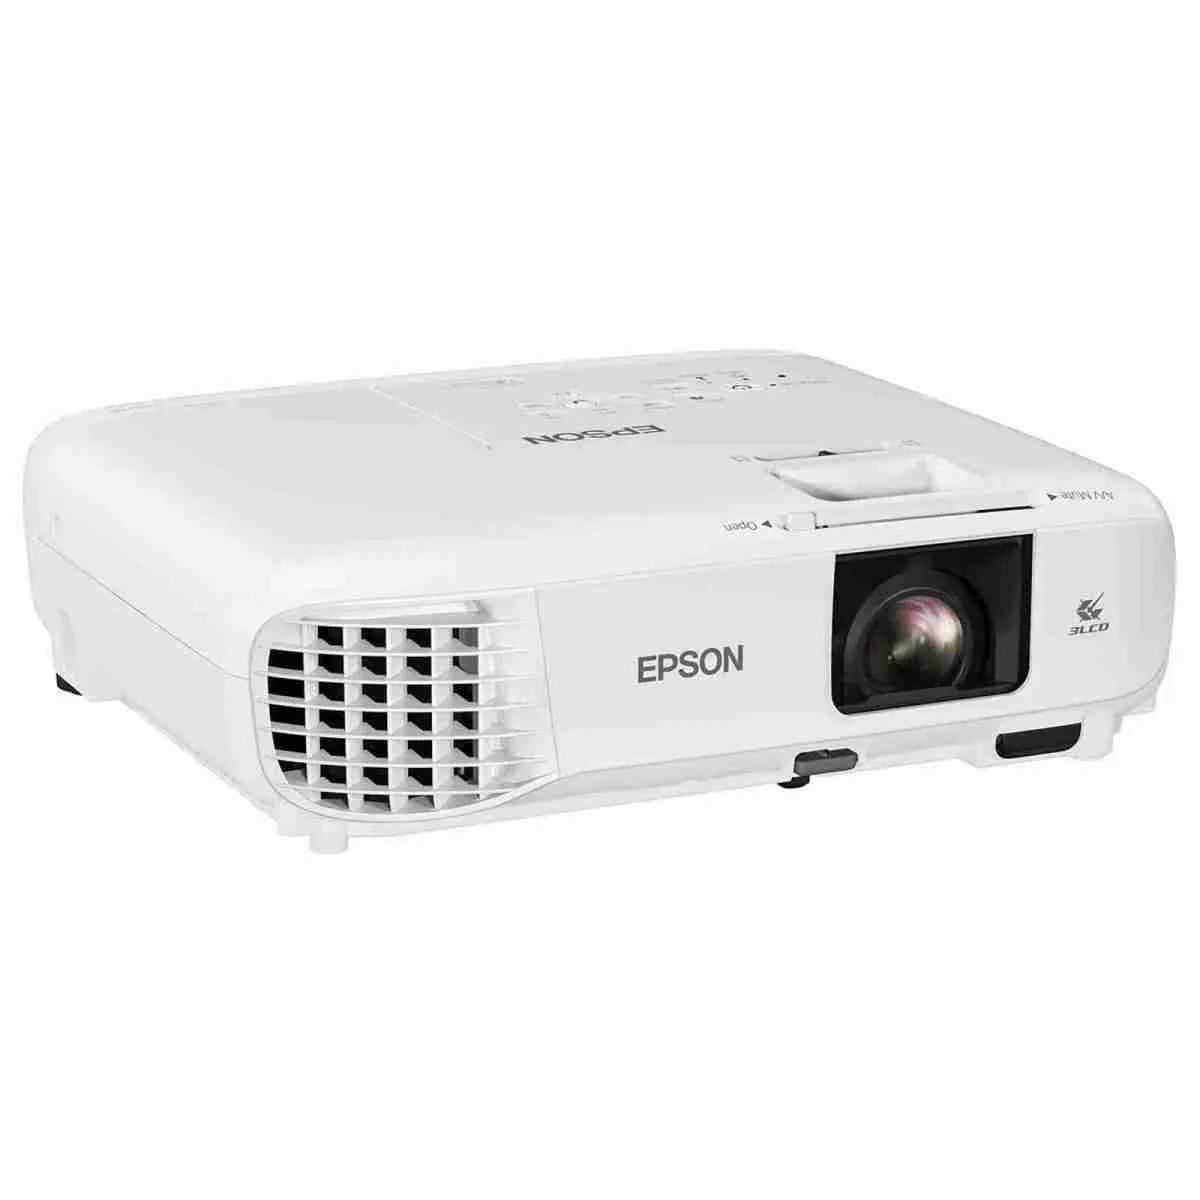 Epson EB-X49 Projector 3LCD Technology - Vertexhub Shop